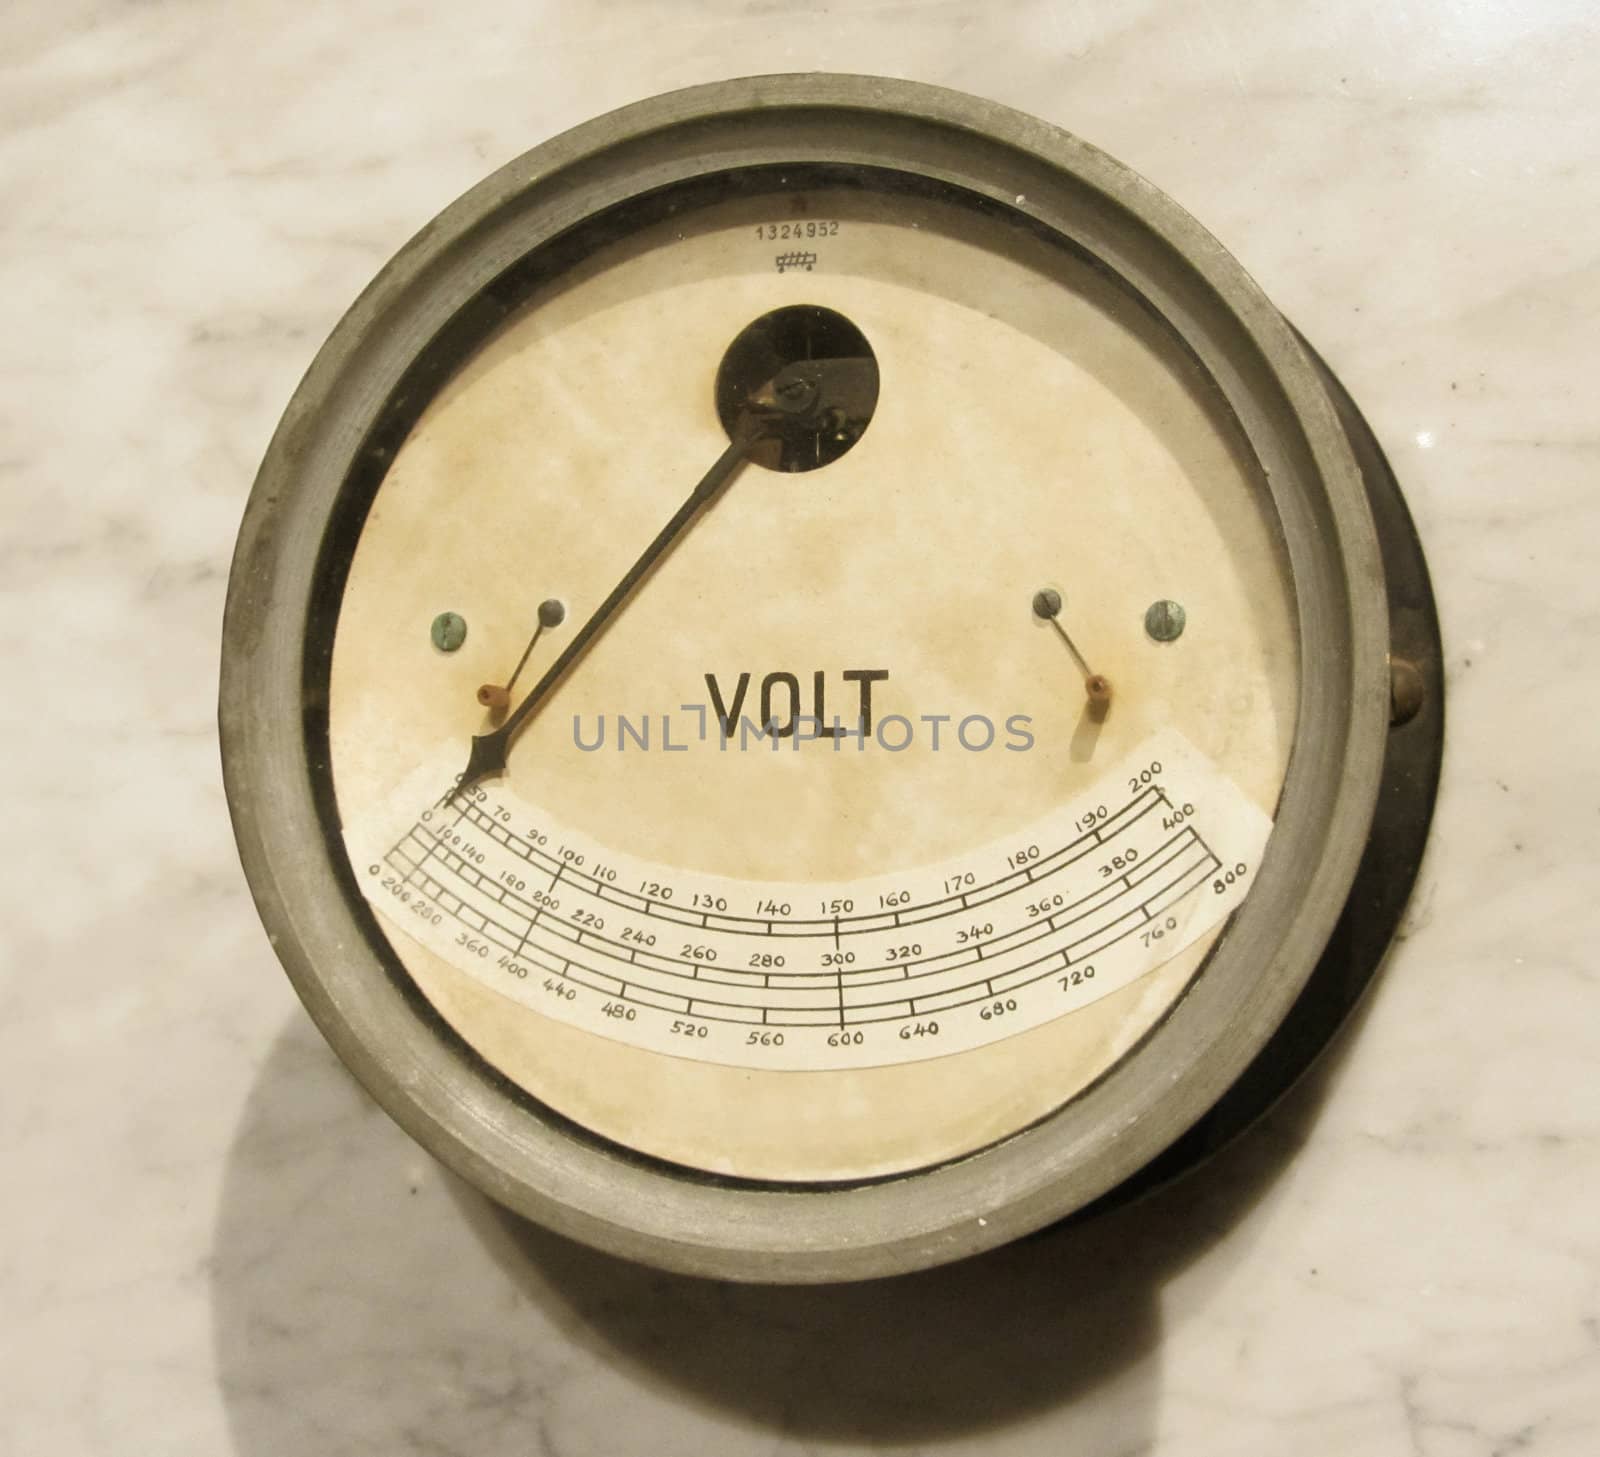 Vintage voltmeter closeup by anterovium